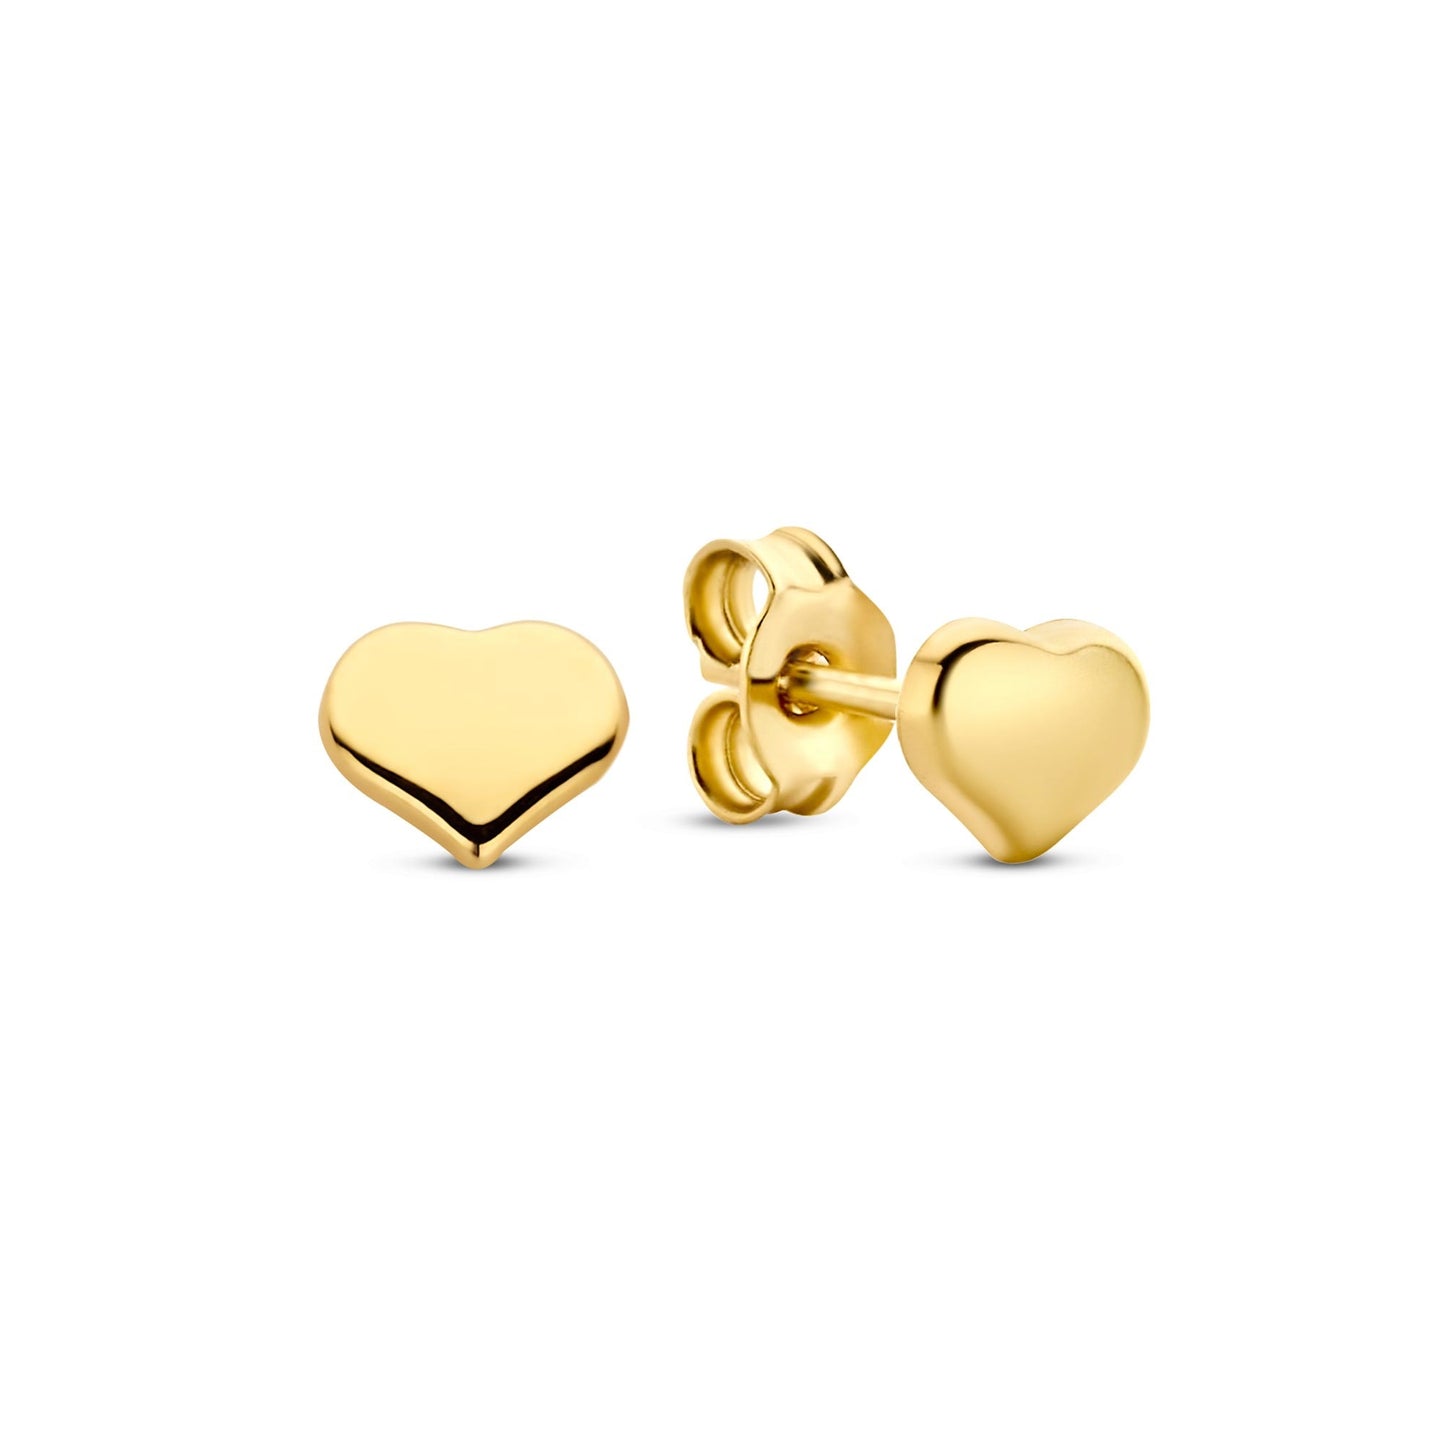 Della Spiga Giulietta 9 karat gold ear studs with heart